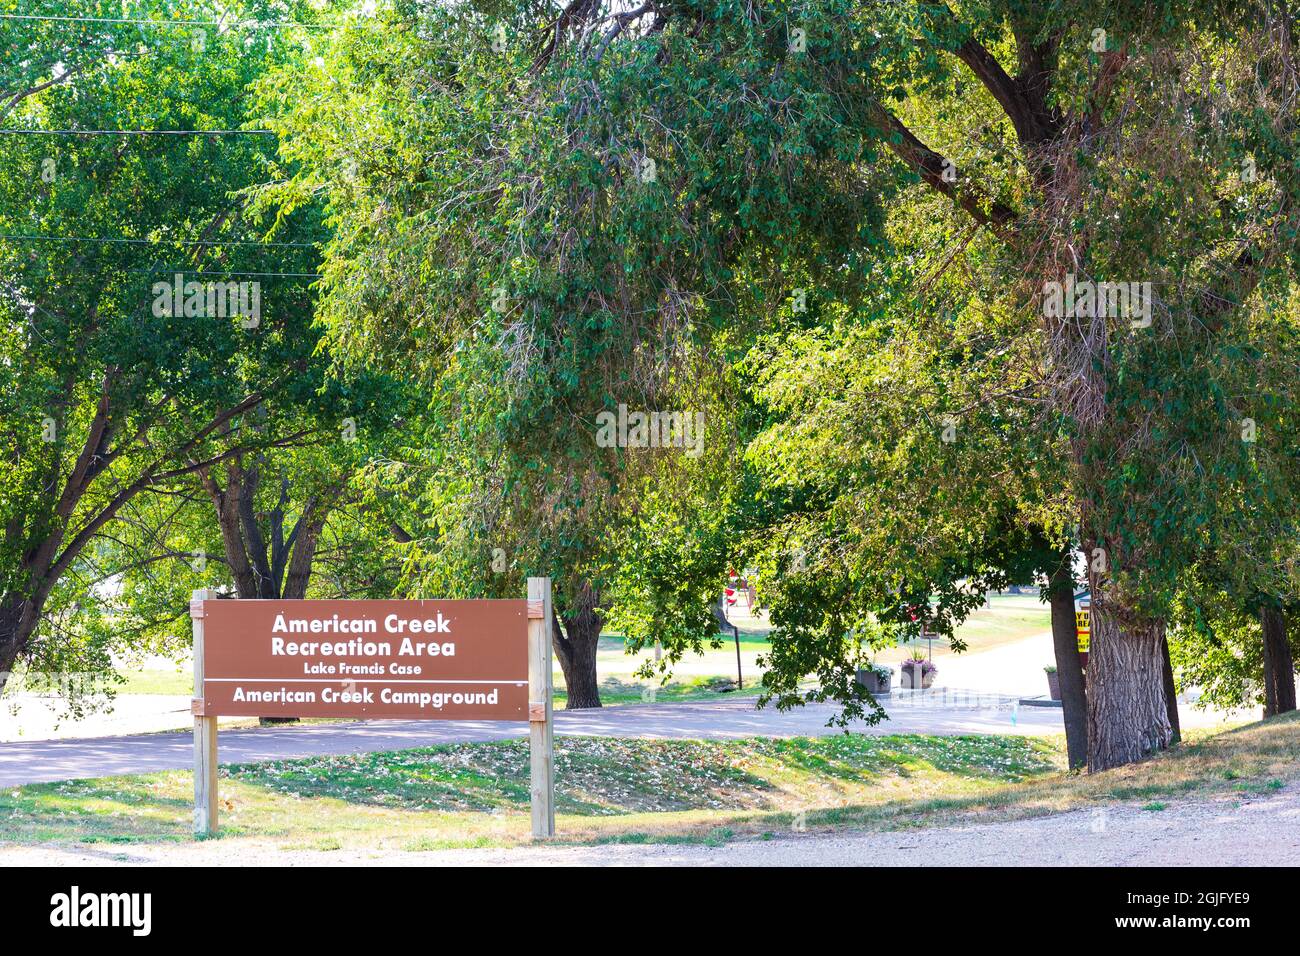 Chamberlain, SD, USA-24. AUGUST 2021: Eingang zum Campingplatz American Creek am Missouri River in Chamberlain. Schilder und Eingang. Stockfoto